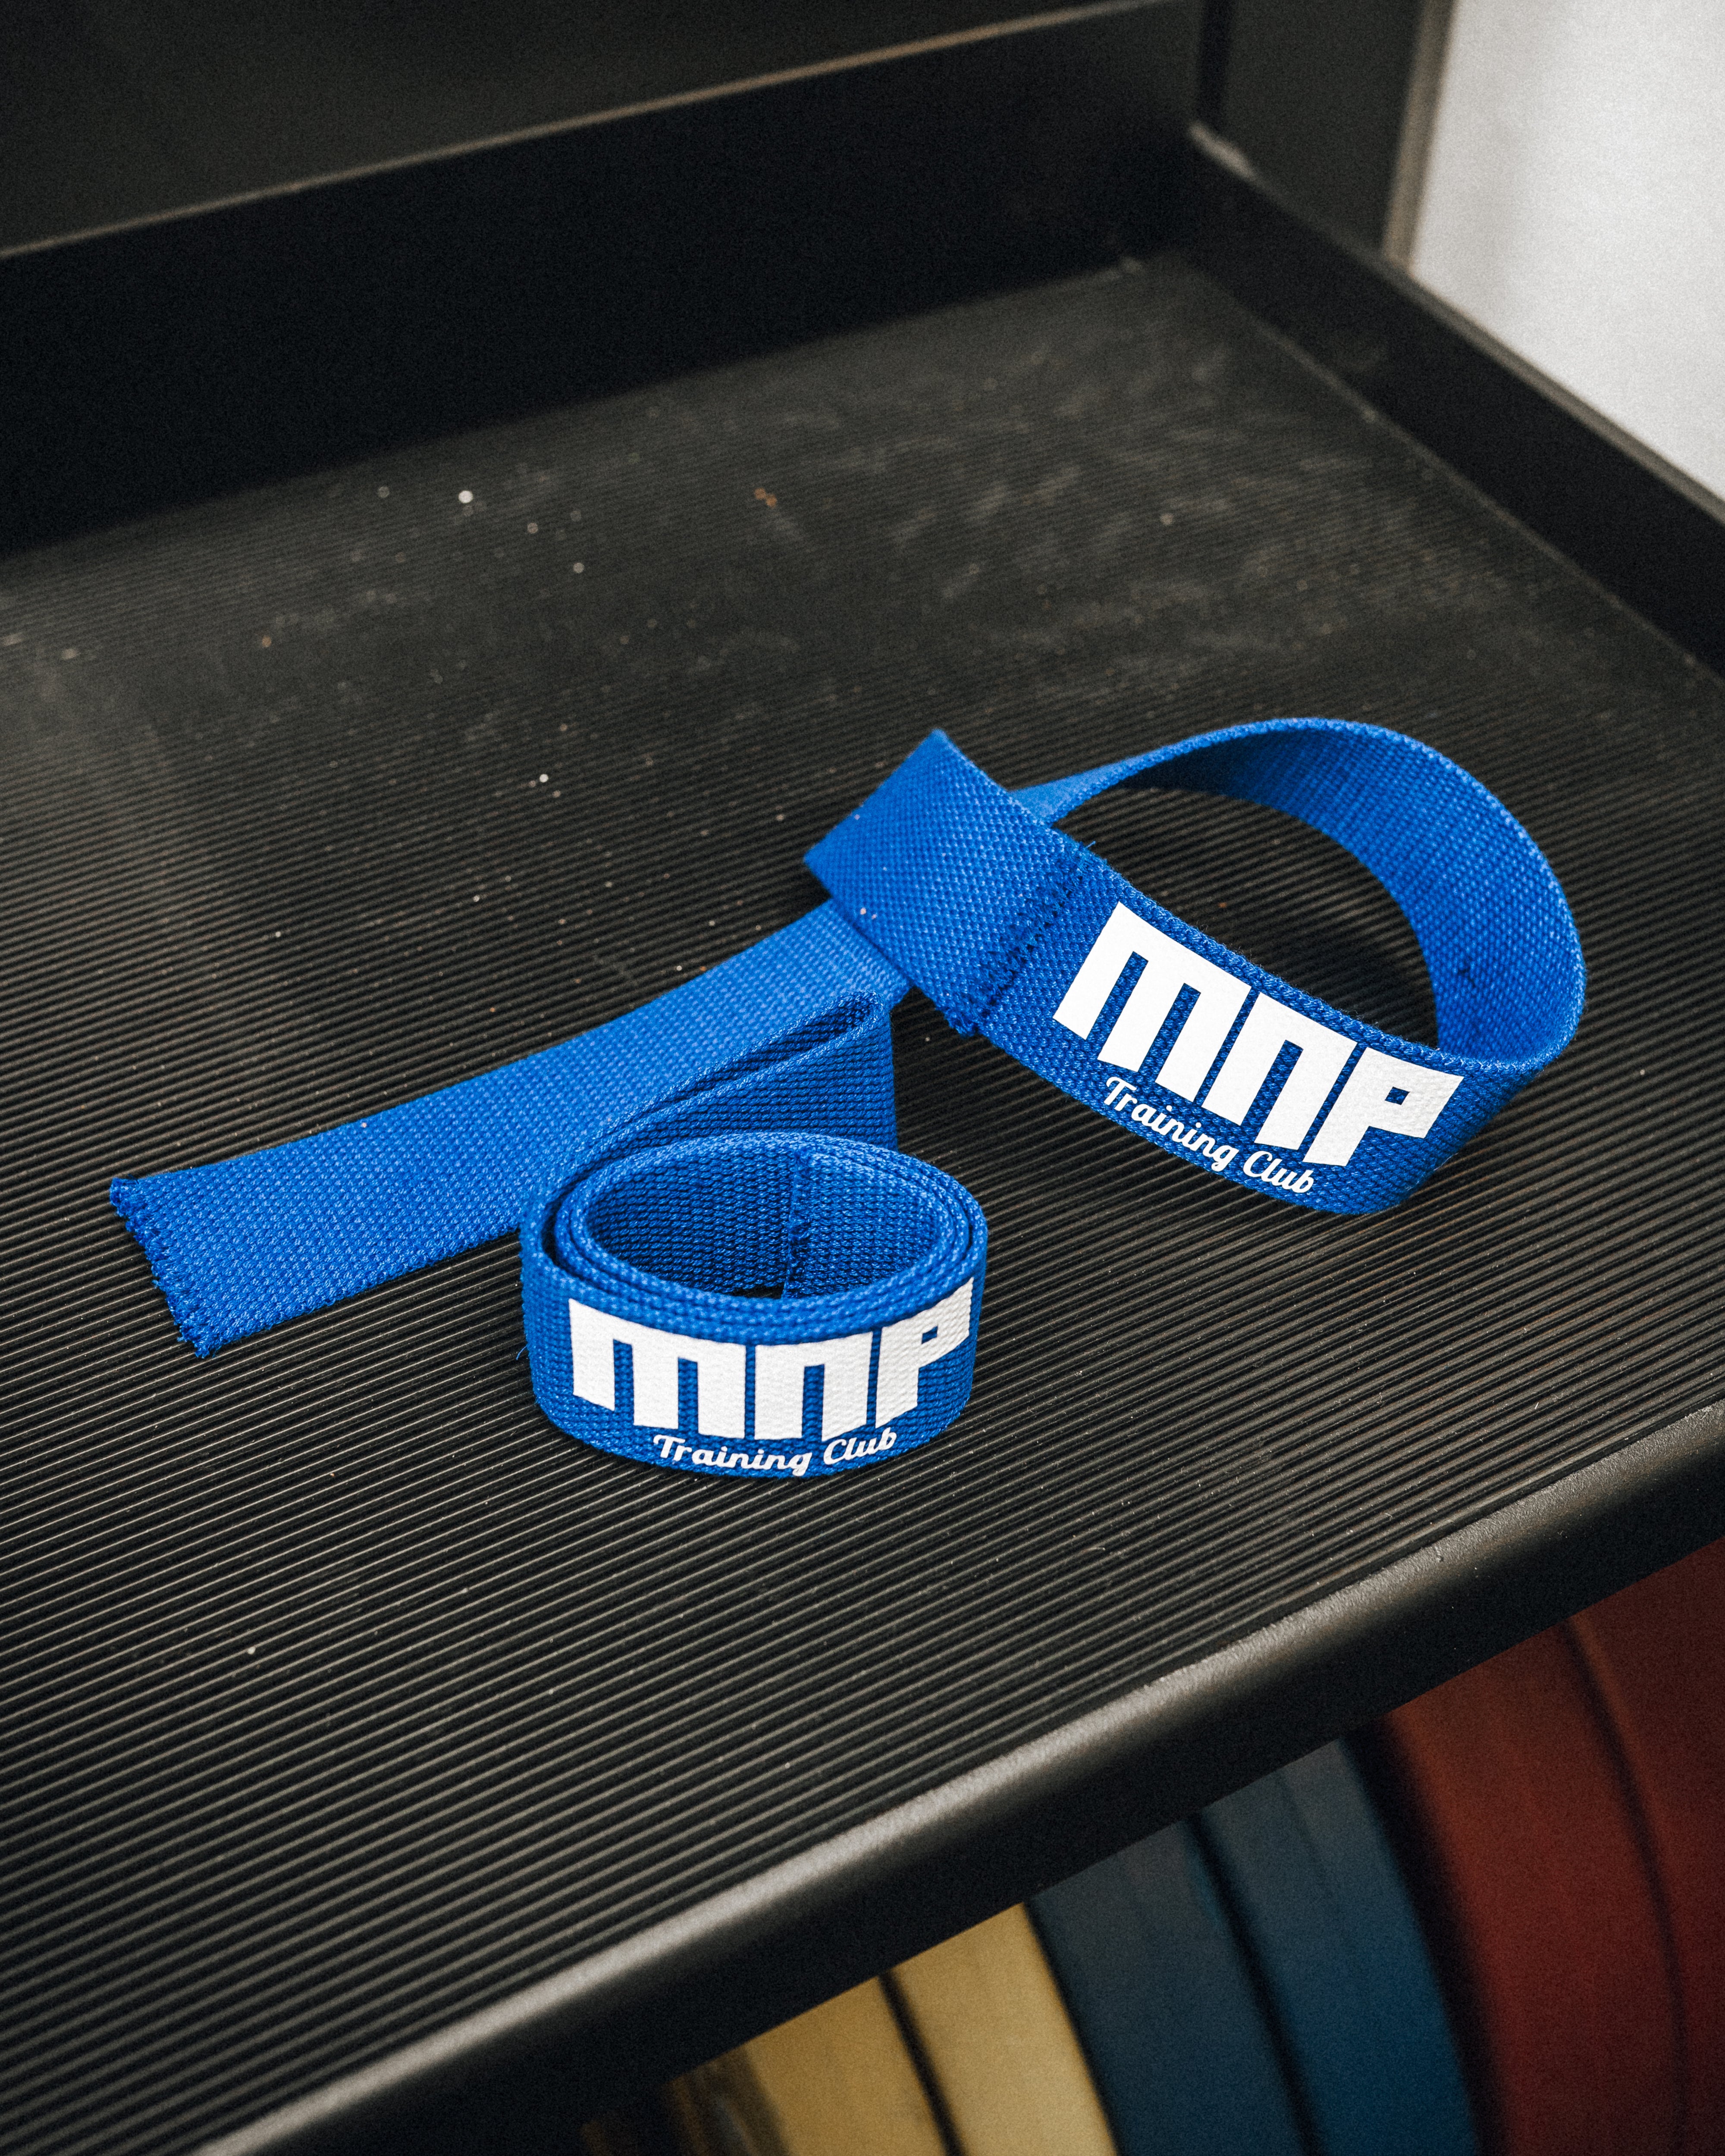 MNP Training Club straps